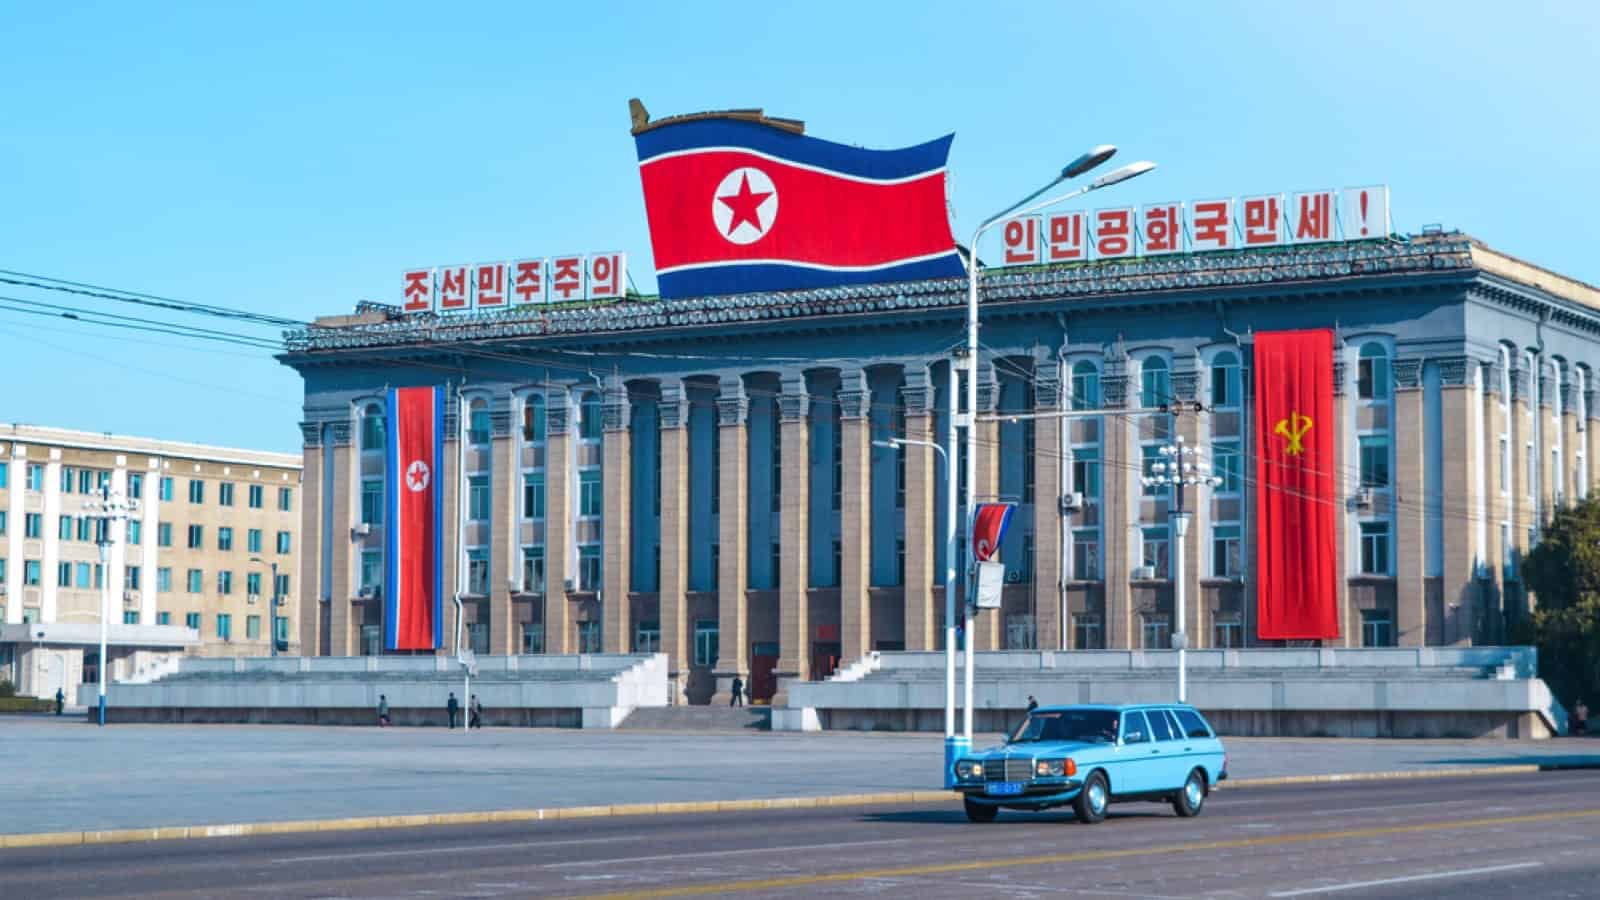 Pyongyang, North Korea - October 9, 2019: Old blue car driving in Pyongyang Street with North Korea Flag